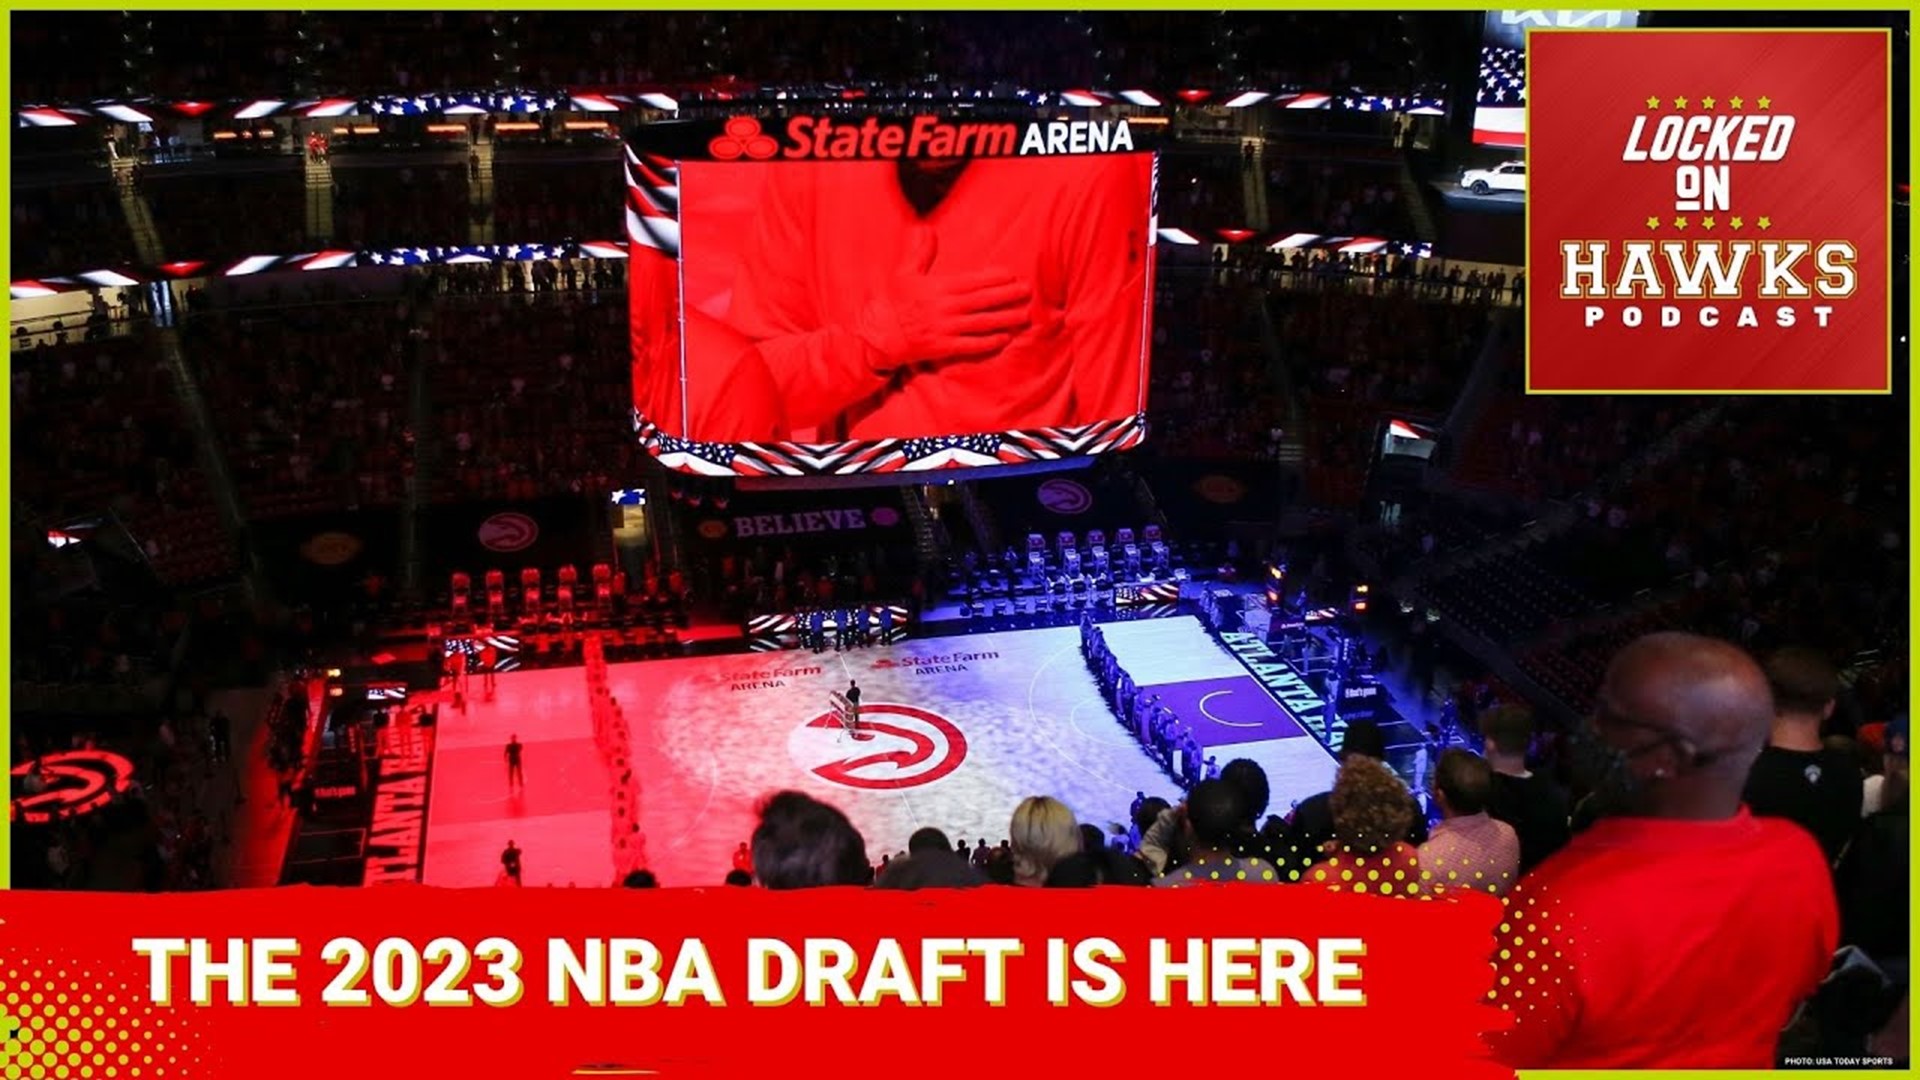 Houston Rockets vs. Atlanta Hawks: Play-by-play, highlights and reactions